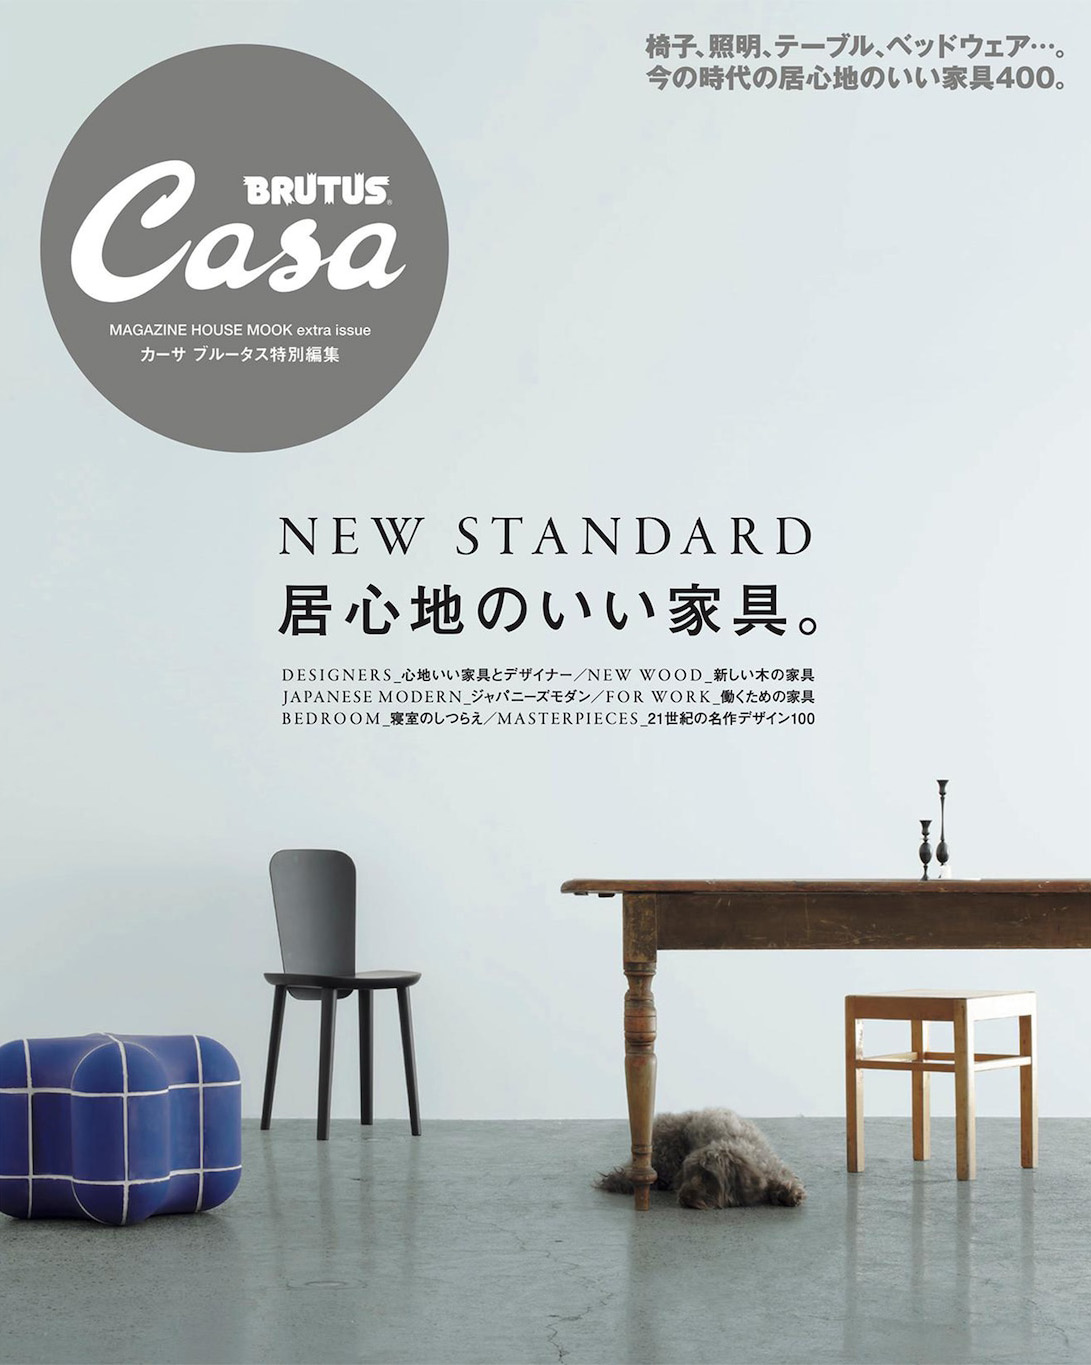 Casa BRUTUS 特別編集「NEW WOOD　新しい木の家具。」掲載のおしらせ。